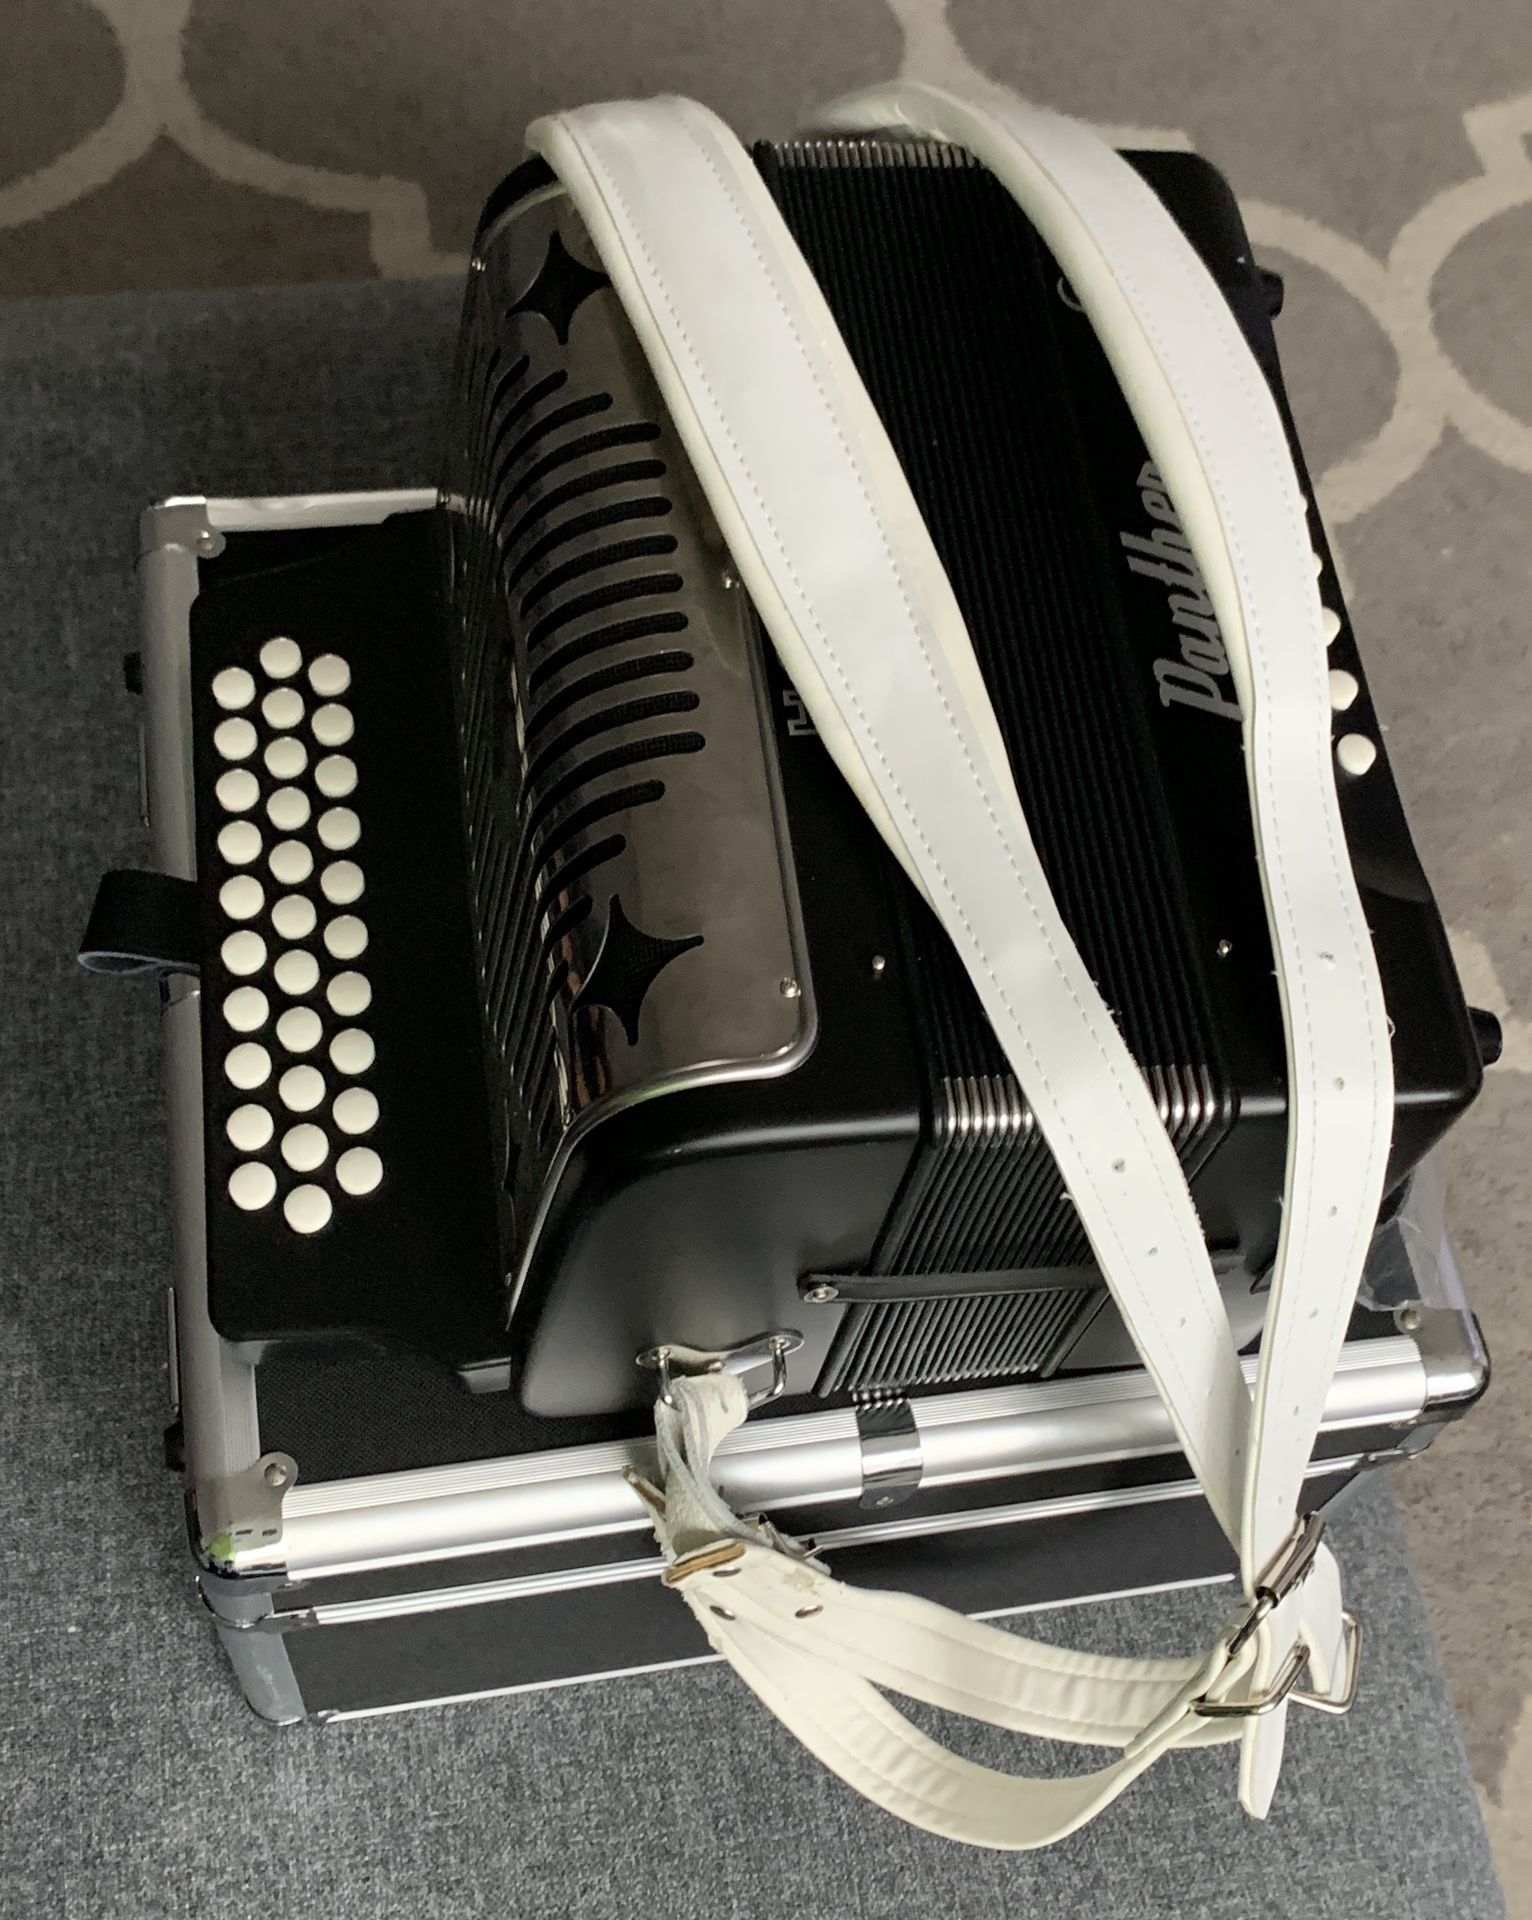 Hohner accordion